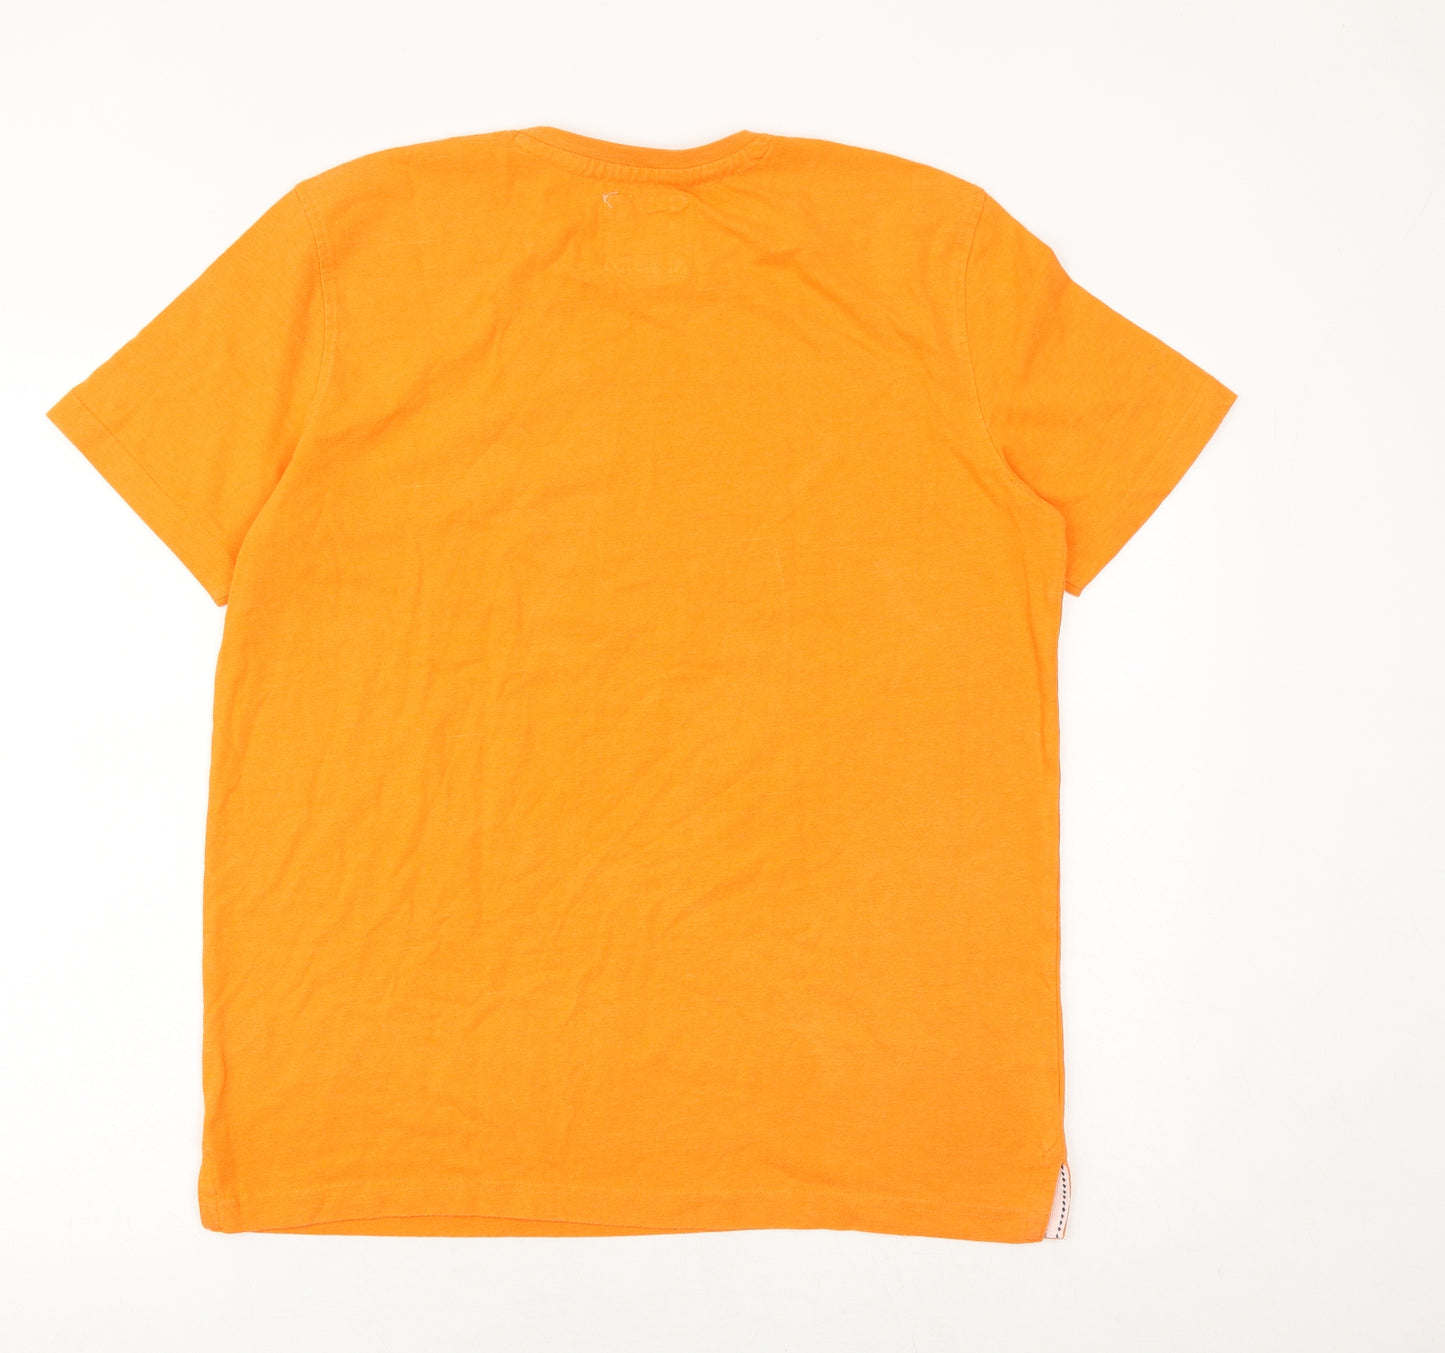 Crew Clothing Mens Orange Cotton T-Shirt Size L Round Neck